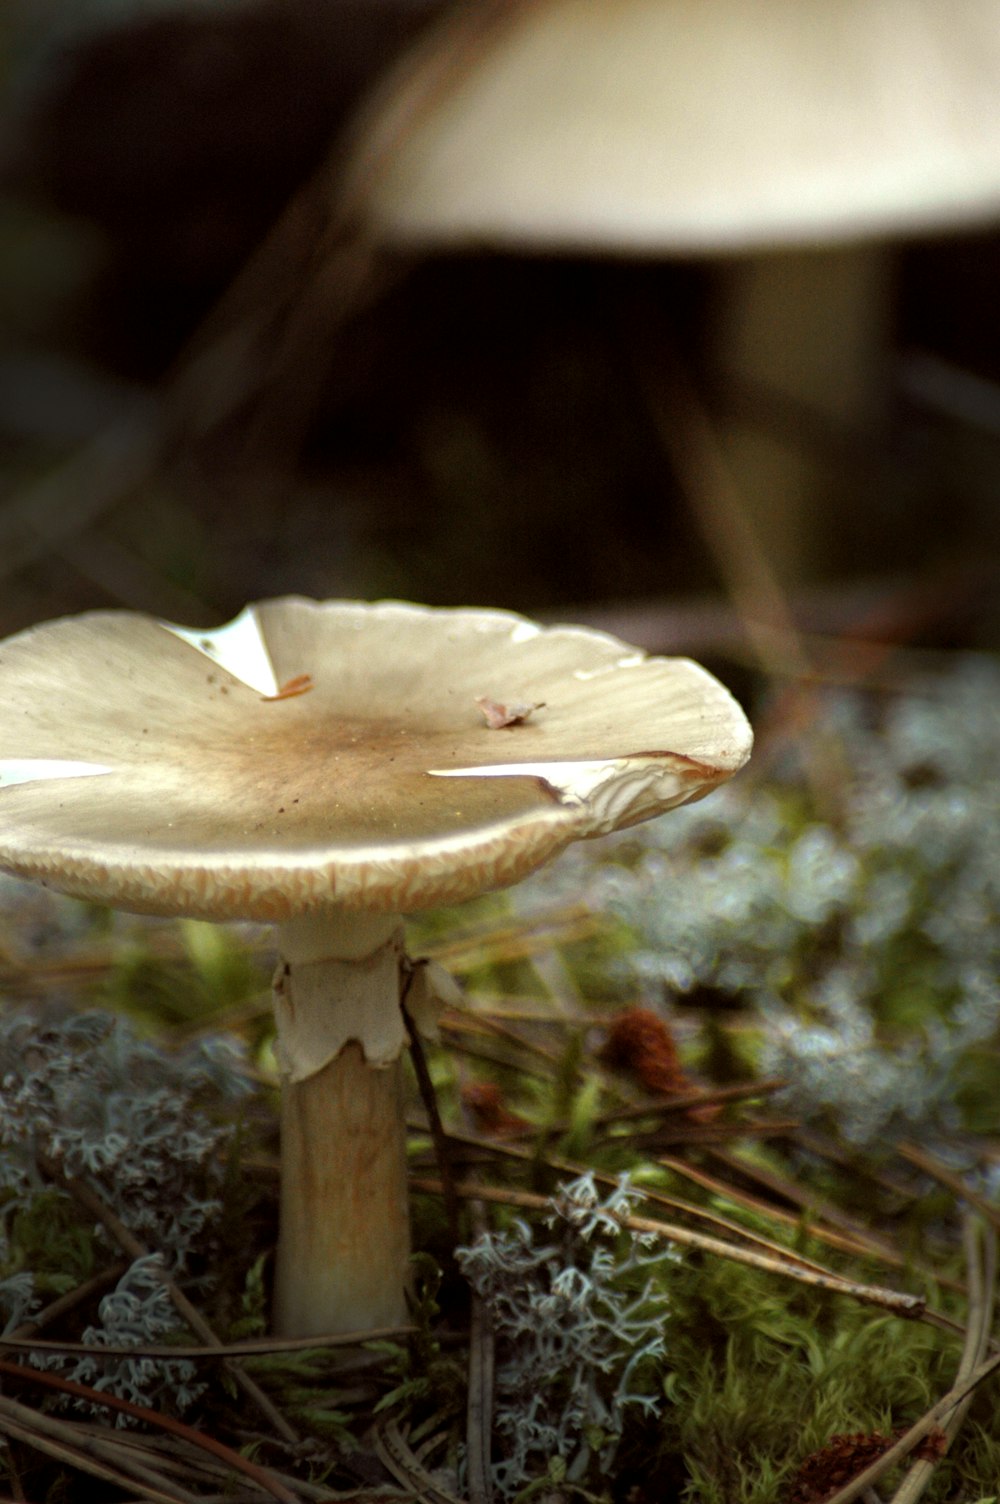 due funghi marroni e bianchi